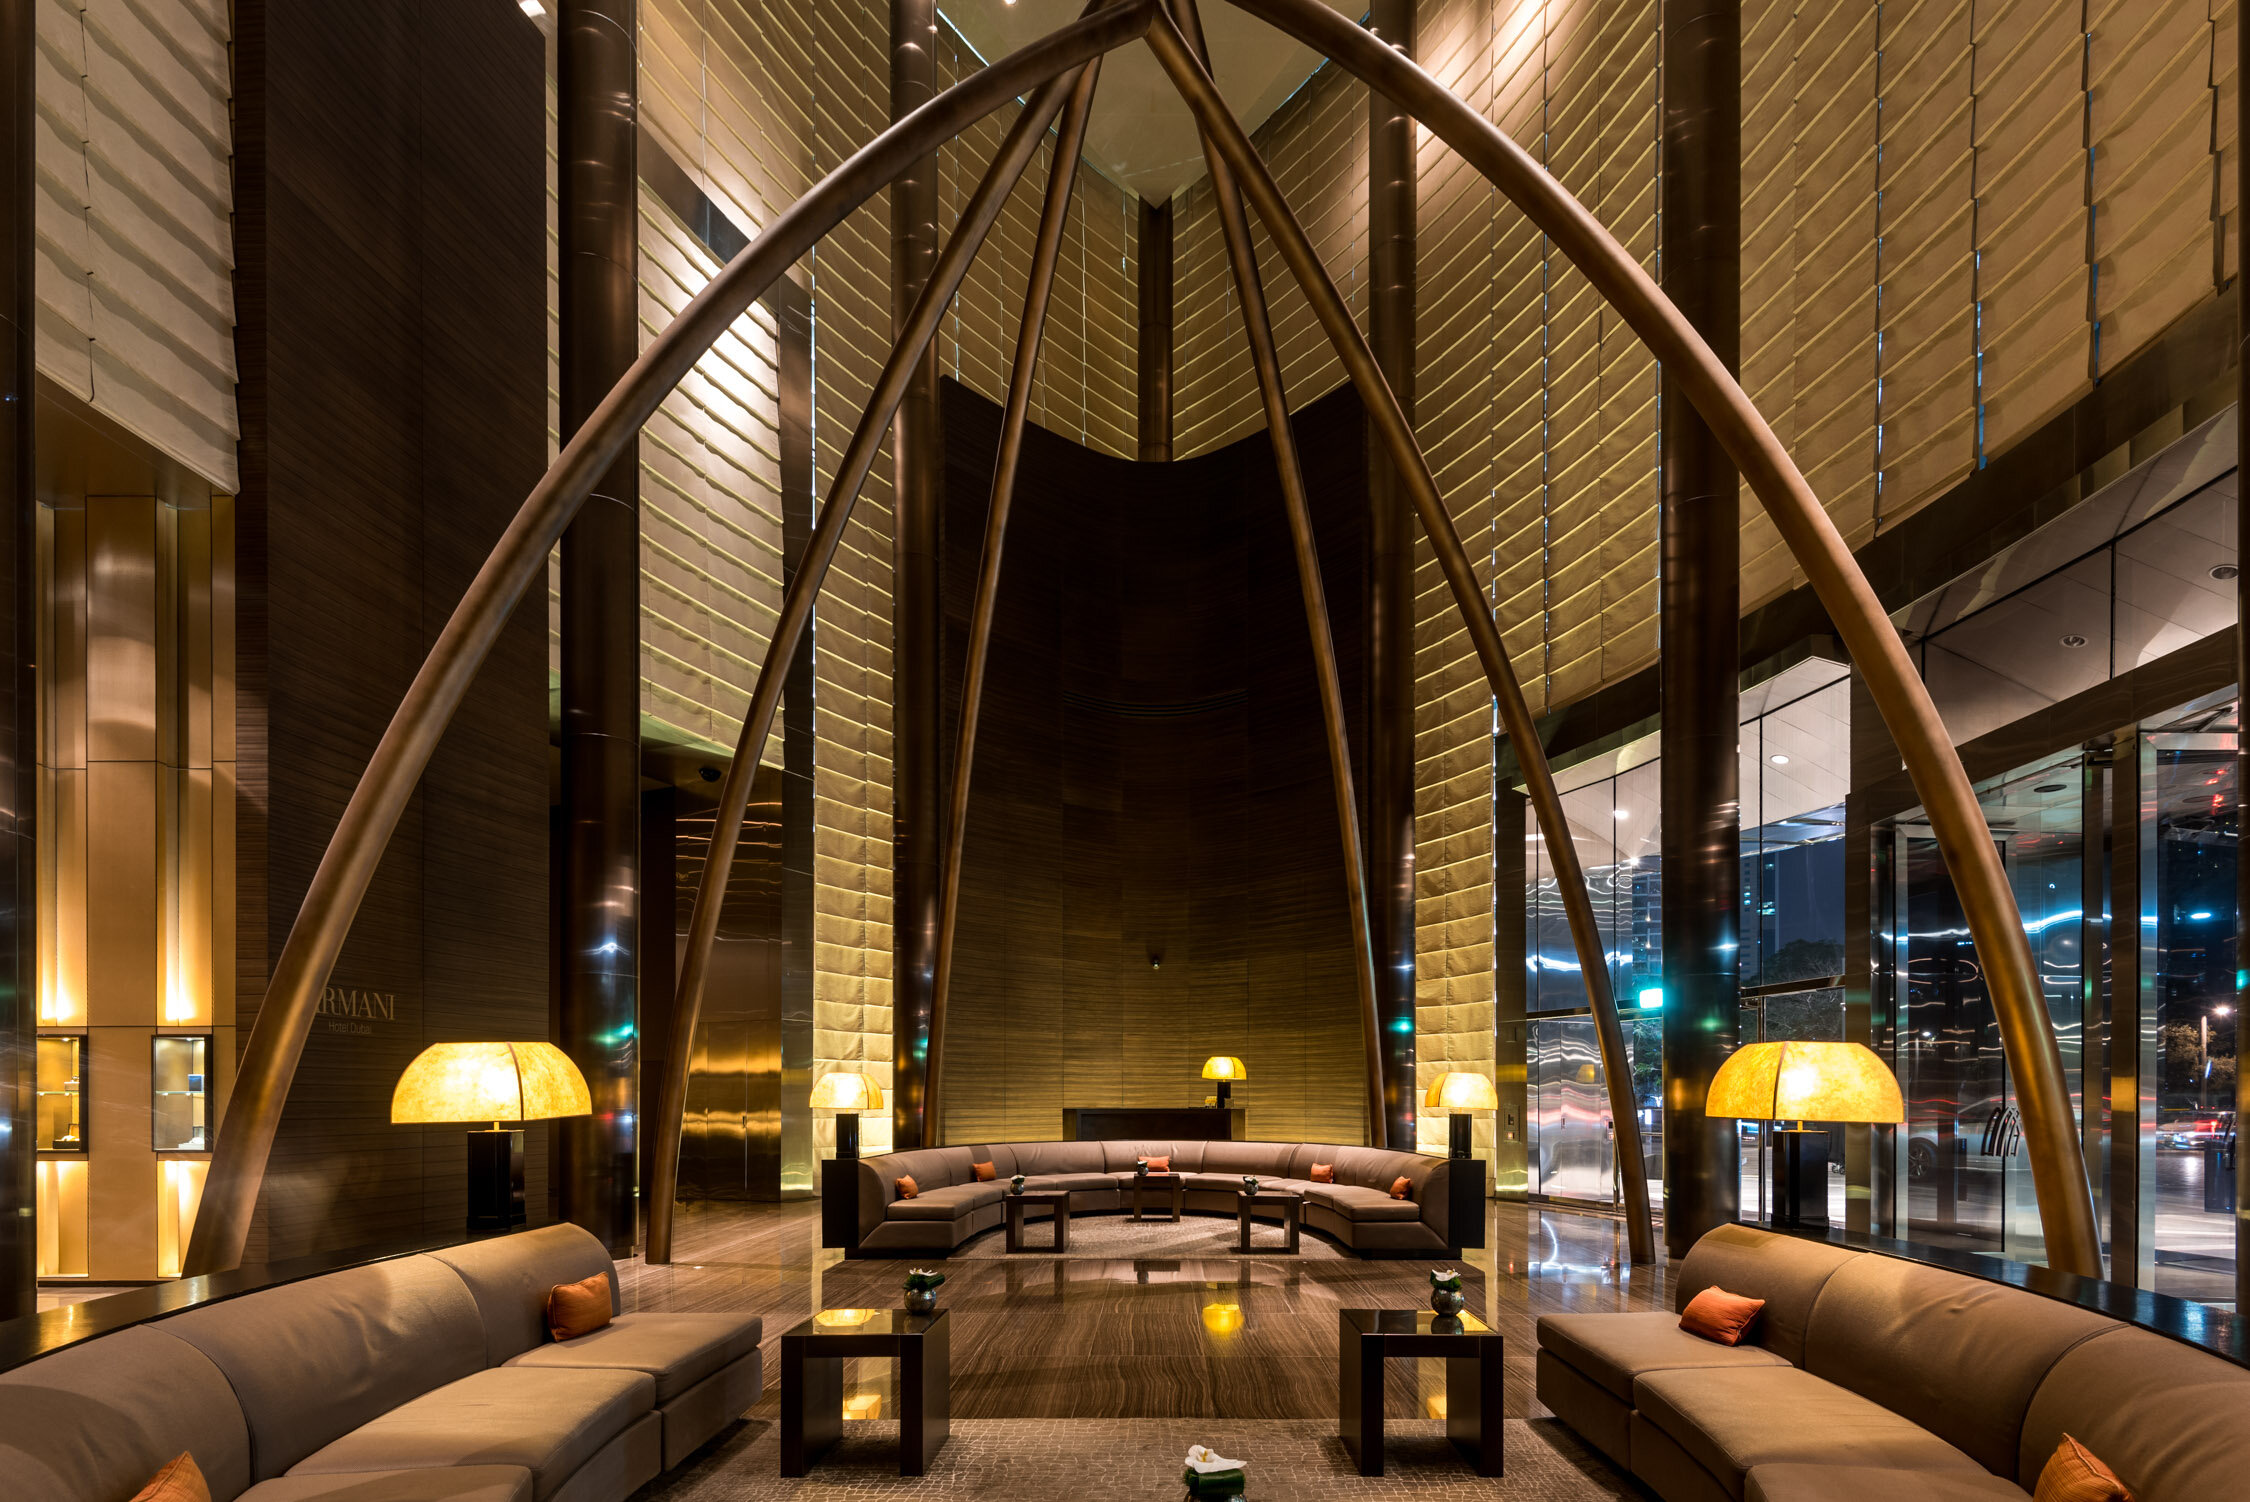 TasteInHotels: Armani Hotel, Dubai: Luxury Hotel in the Burj Khalifa